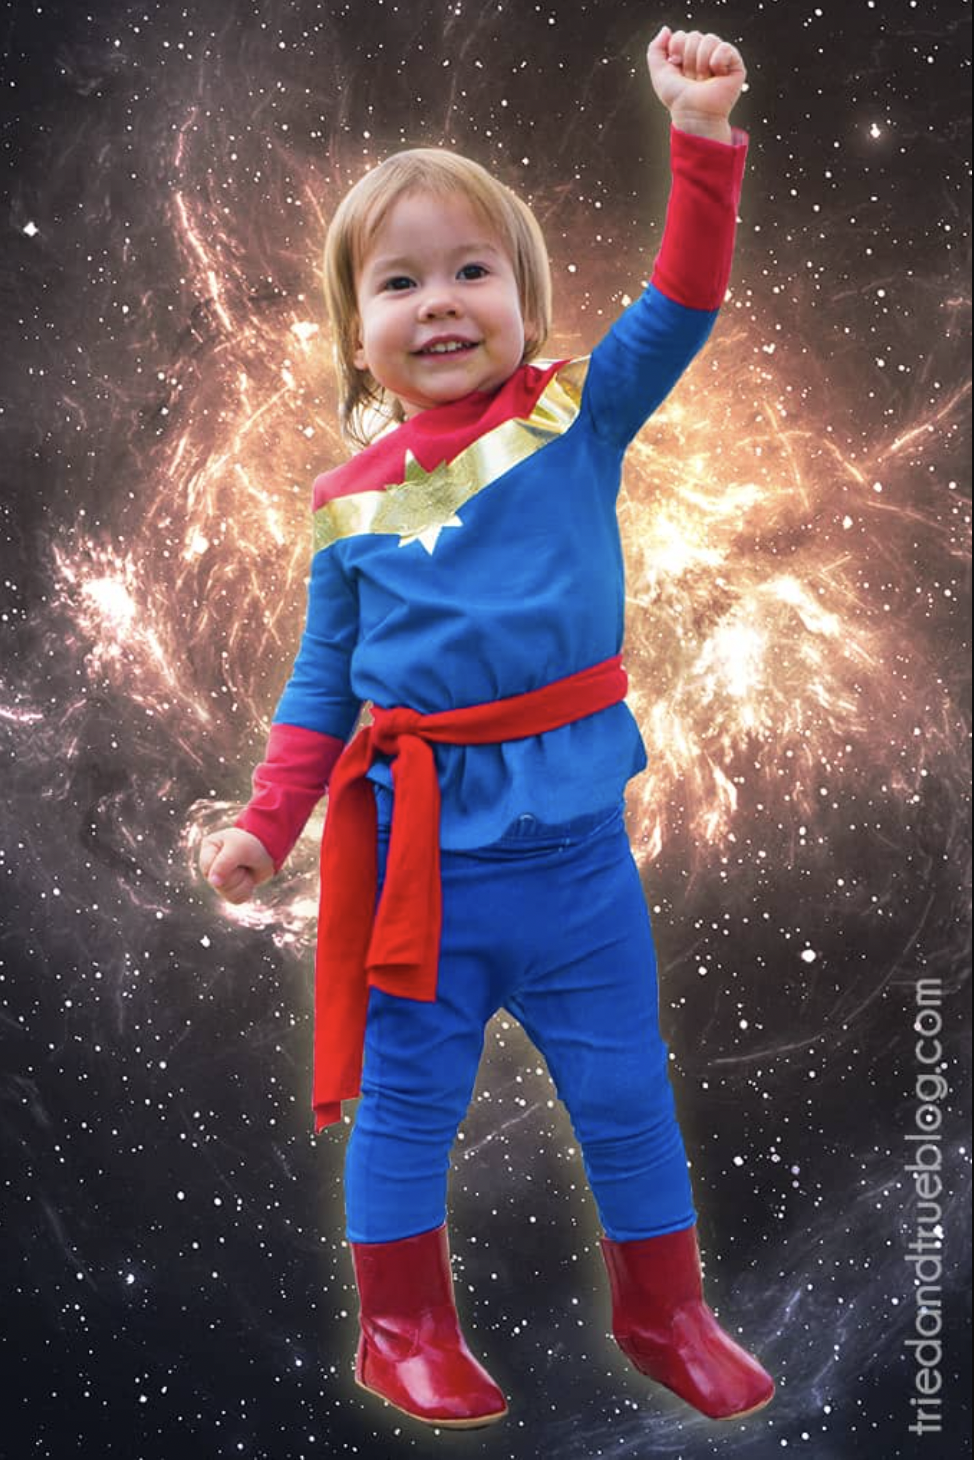 teen girl superman costume